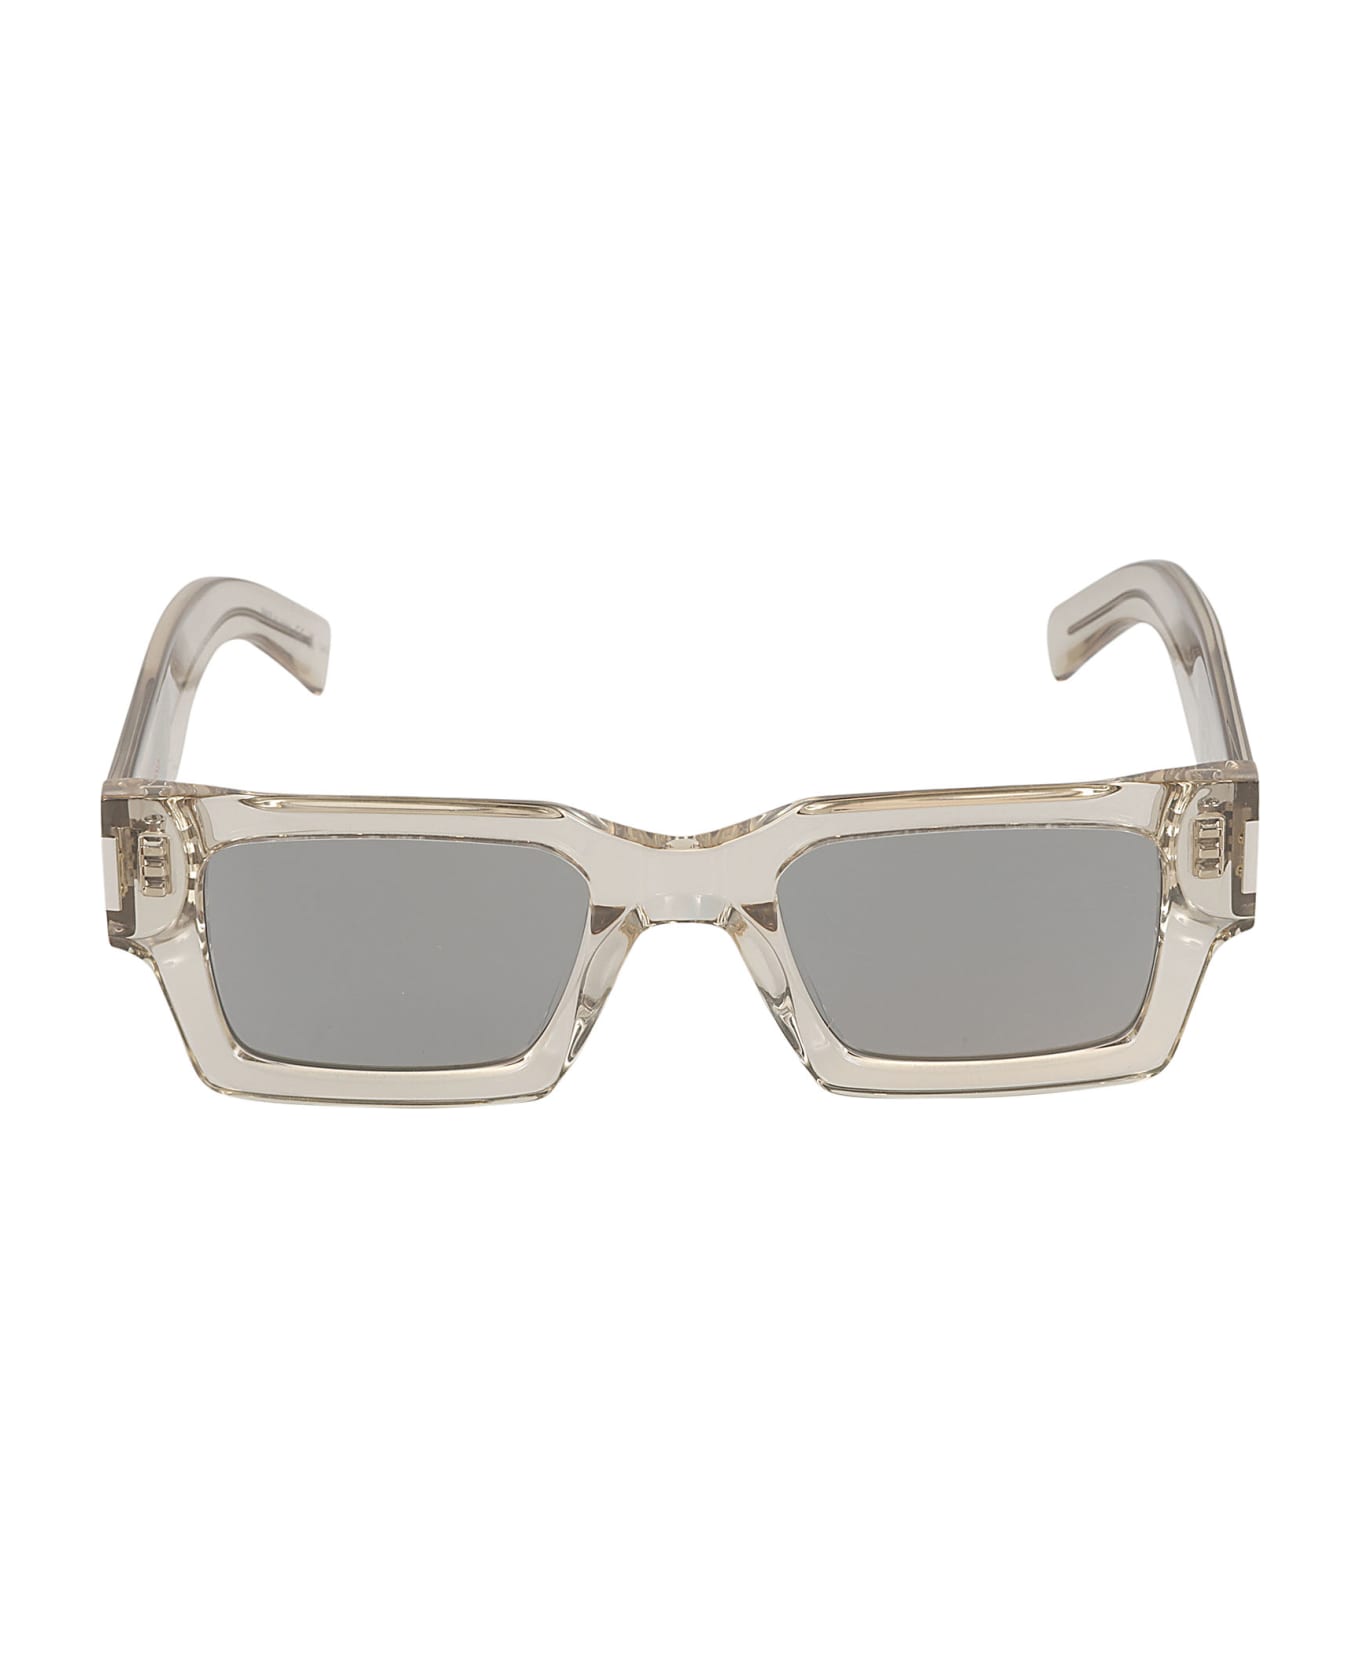 Saint Laurent Eyewear Square Frame Transparent Sunglasses - Beige/Silver サングラス